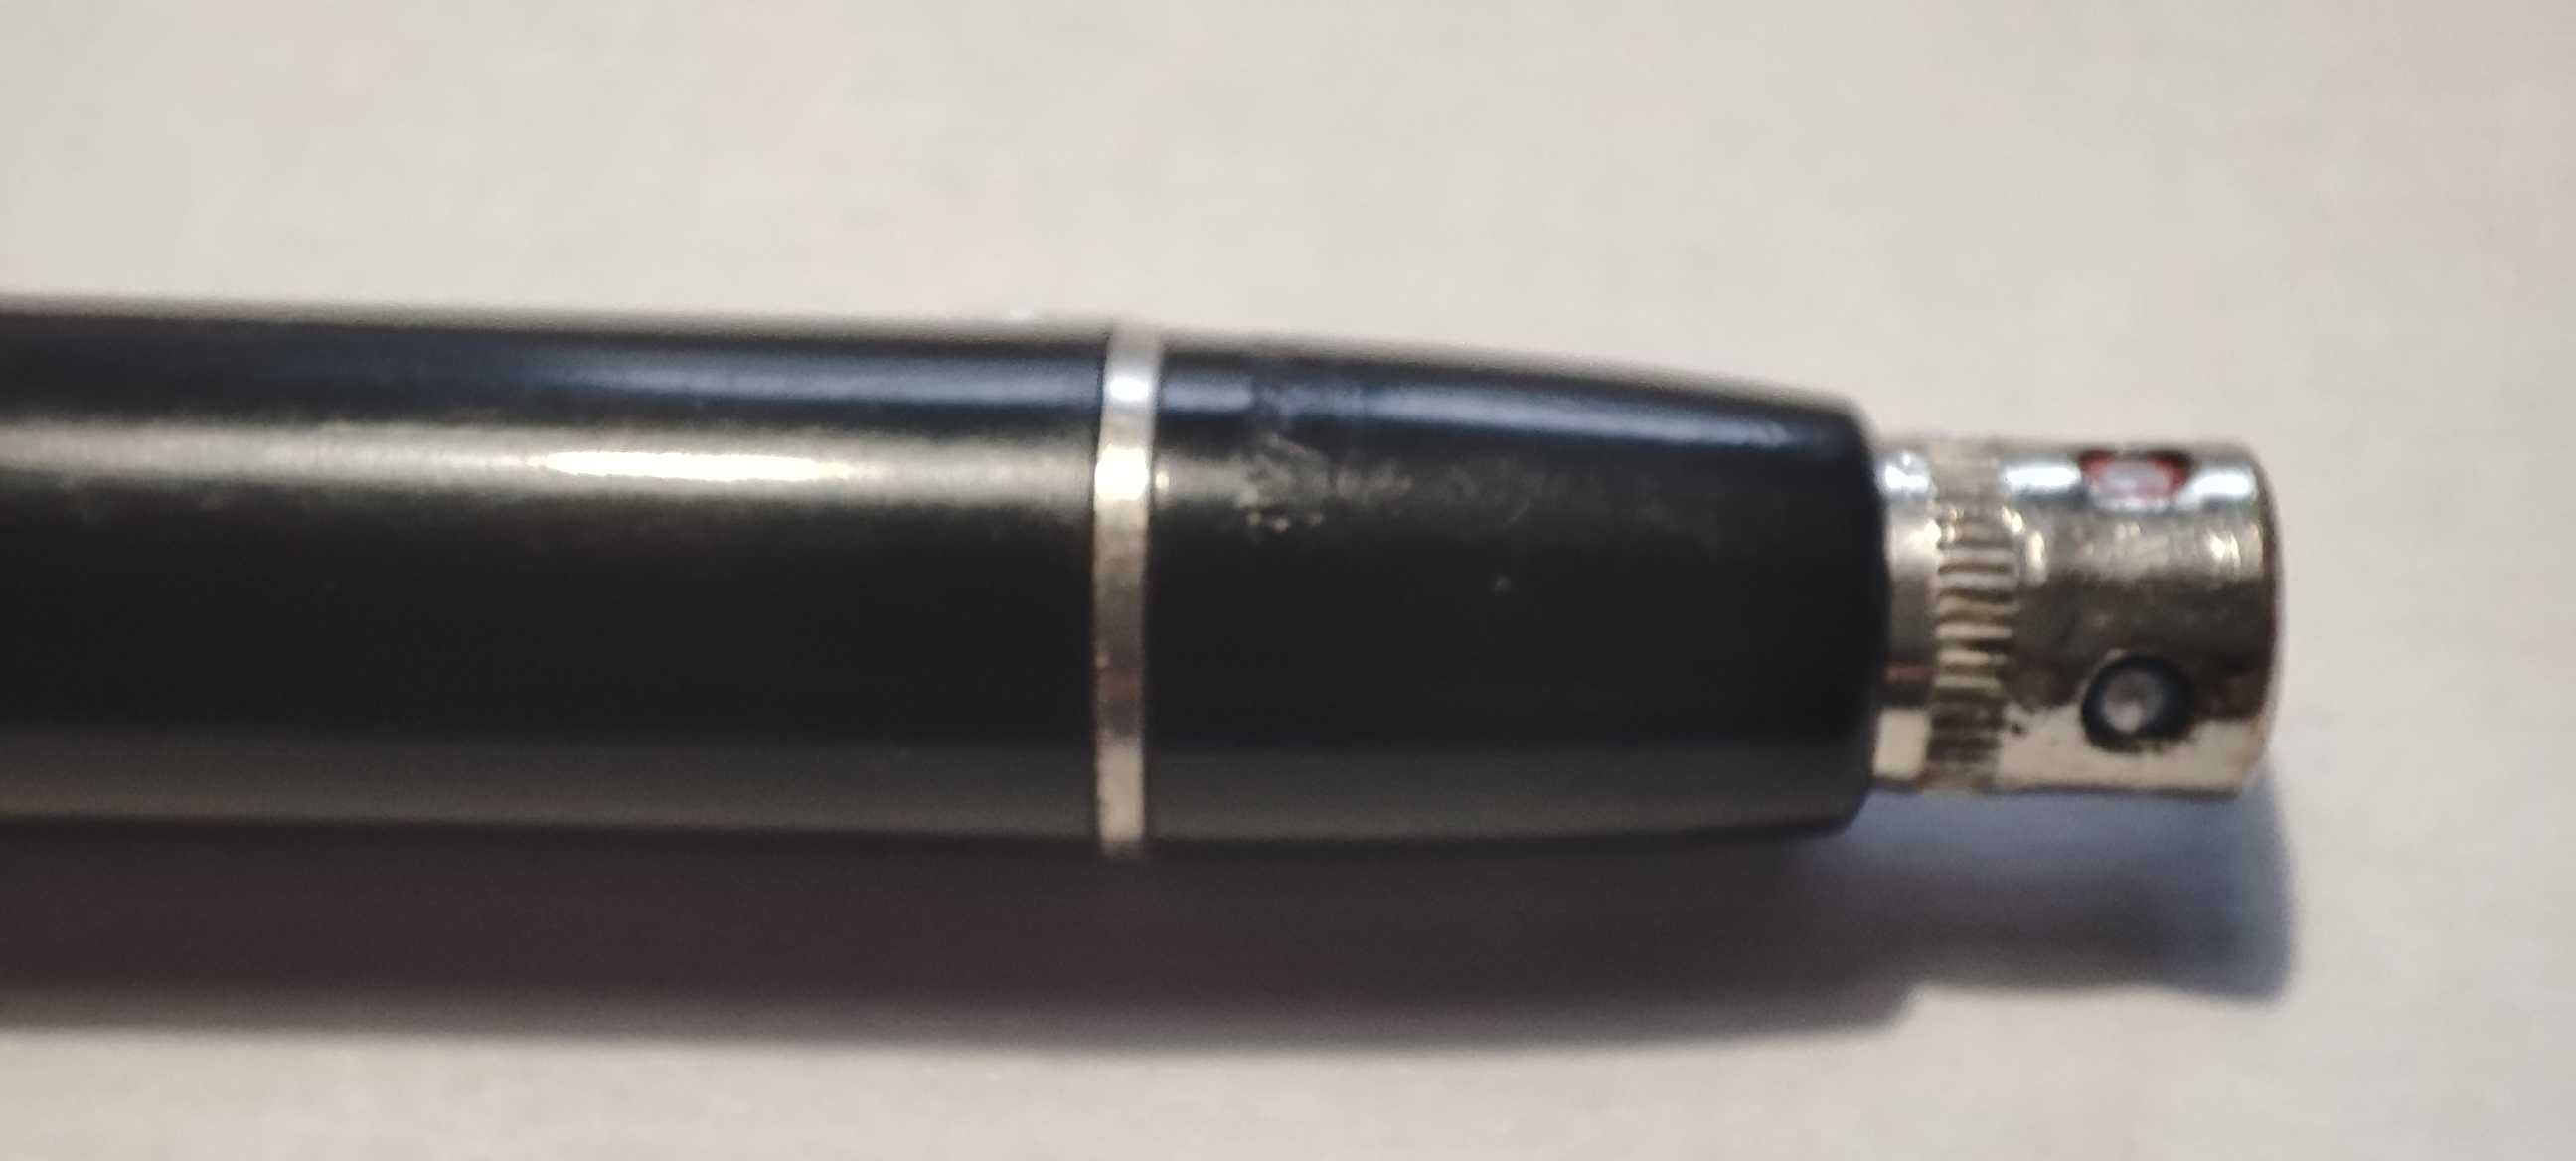 Ołówek L&C 1940 Hardtmuth 5610/4 4 kolory